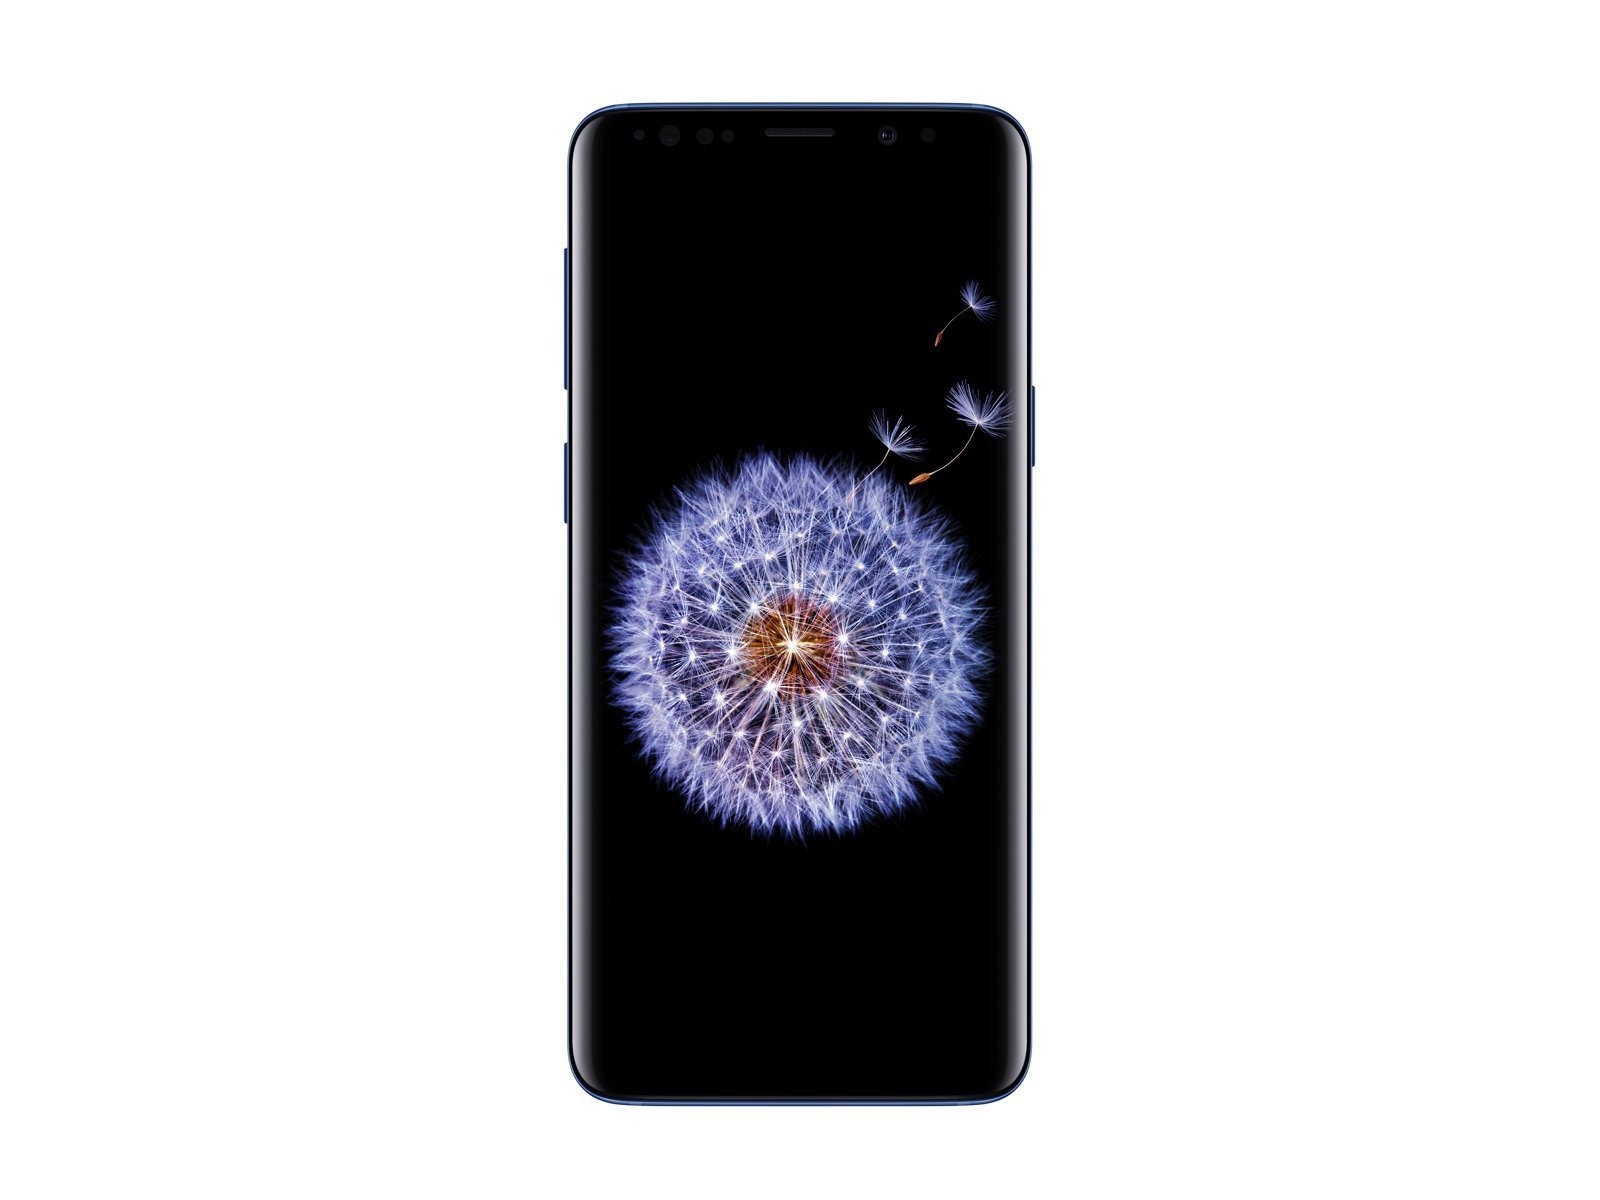 Samsung Galaxy S9 Plus (SM-G965F/DS) 6GB/128GB 6.2-inches LTE Dual SIM Factory Unlocked - International Stock No Warranty (Midnight Black)